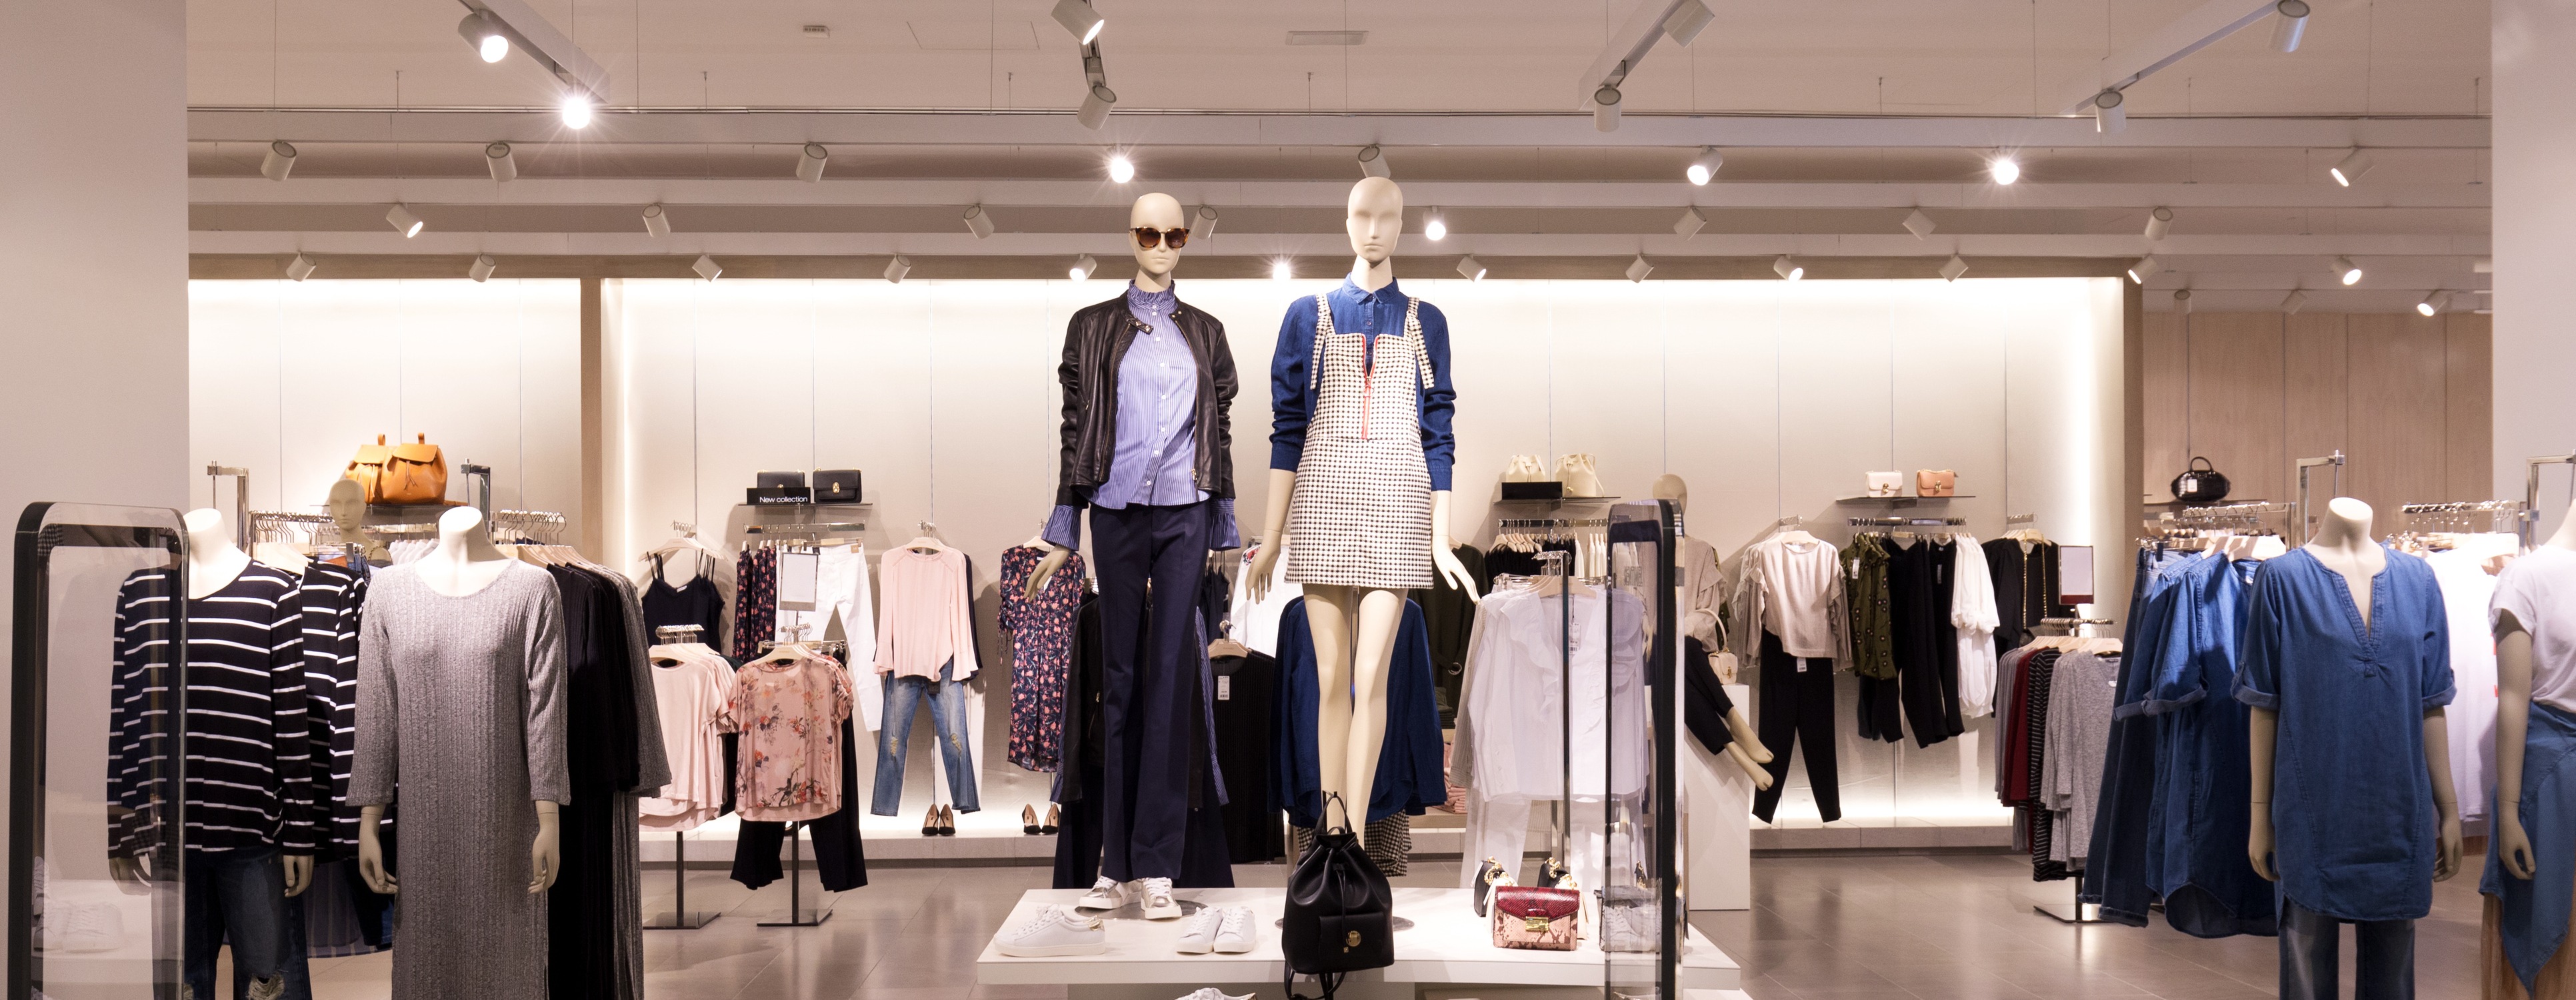 Visual merchandising in retail: the surprising science behind it